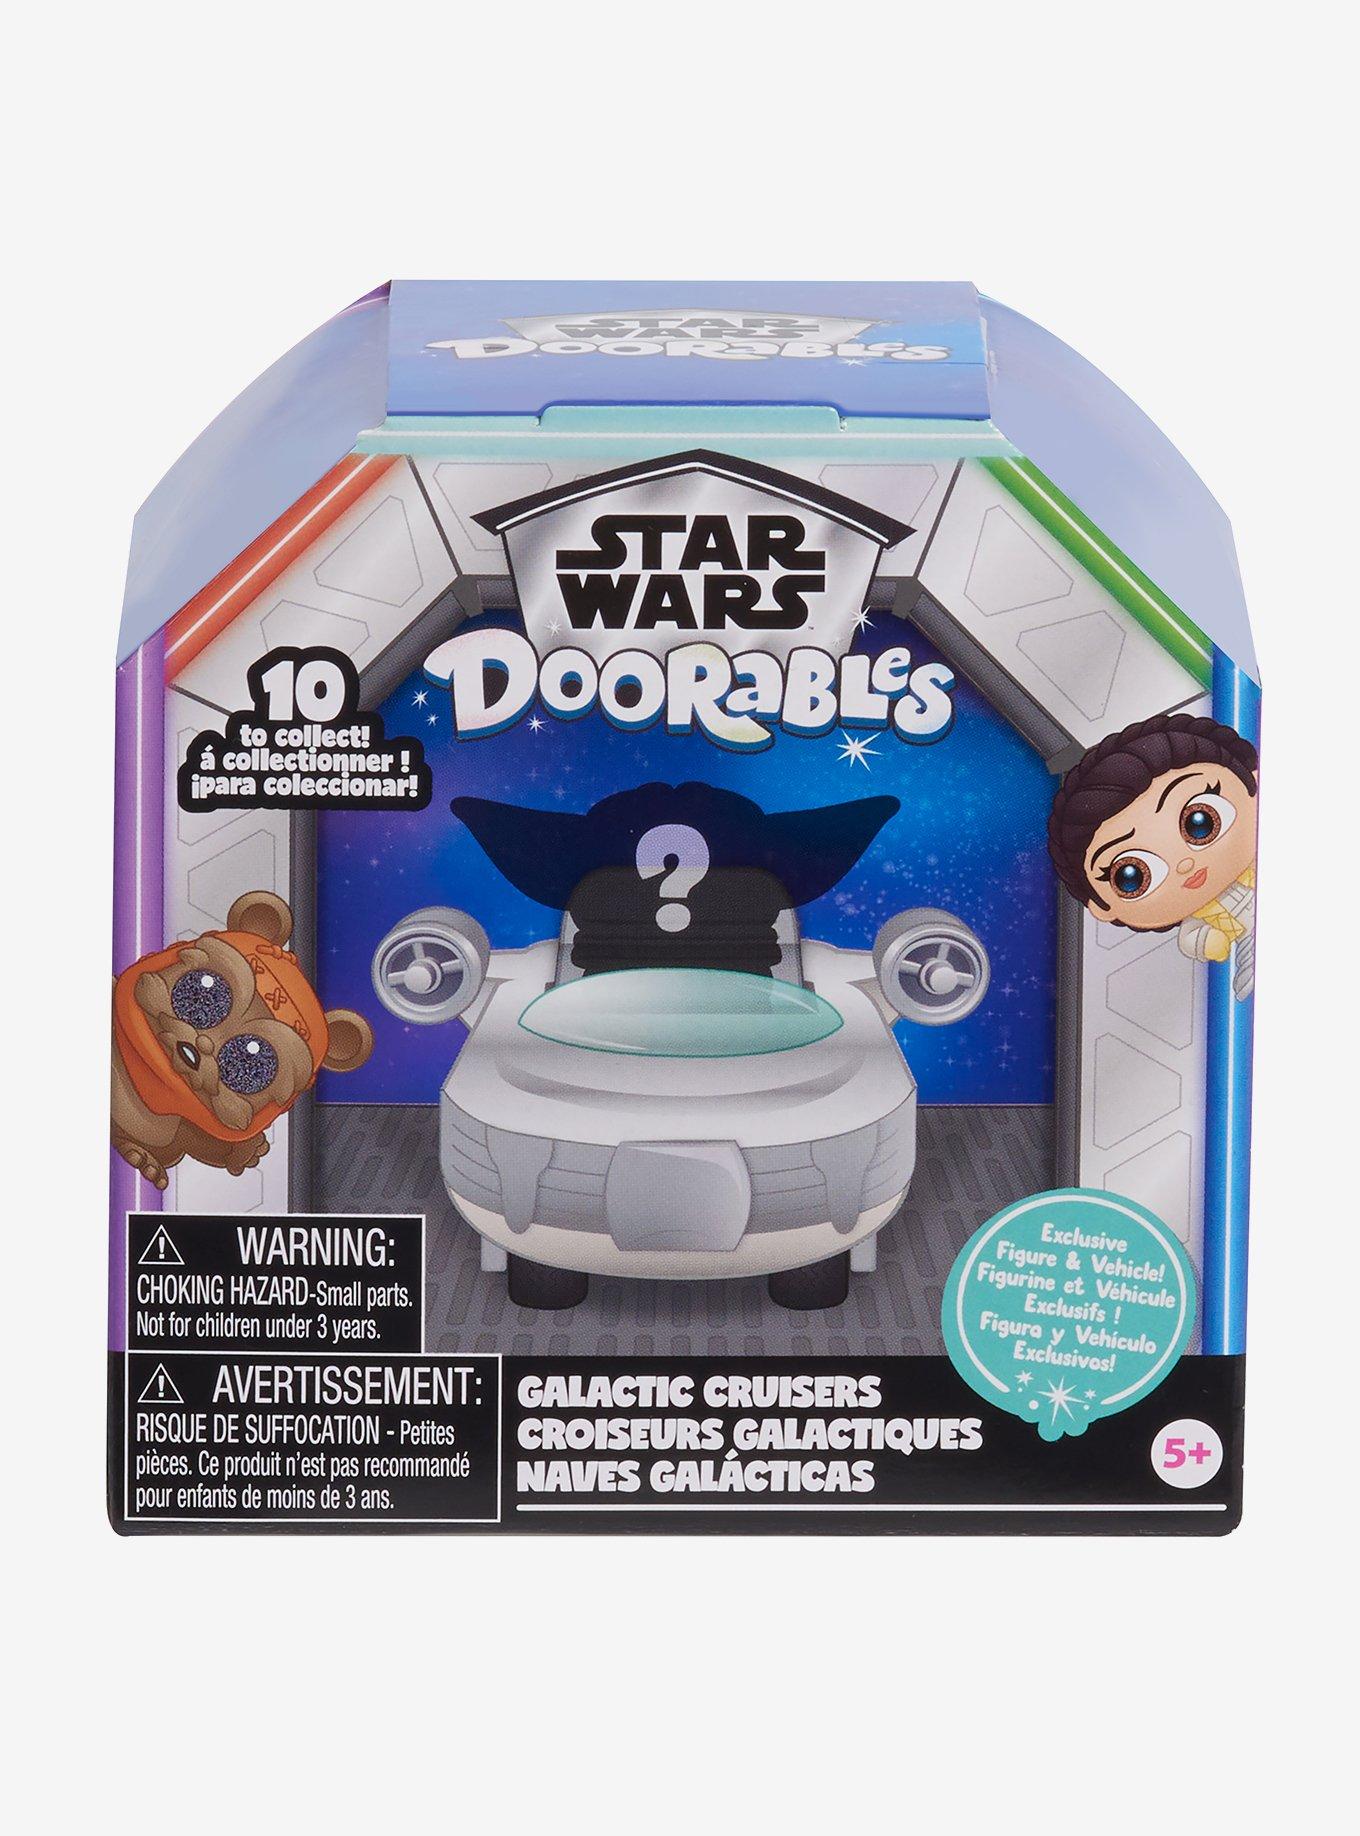 Hot Topic Star Wars Doorables Galactic Cruisers Blind Box Figure